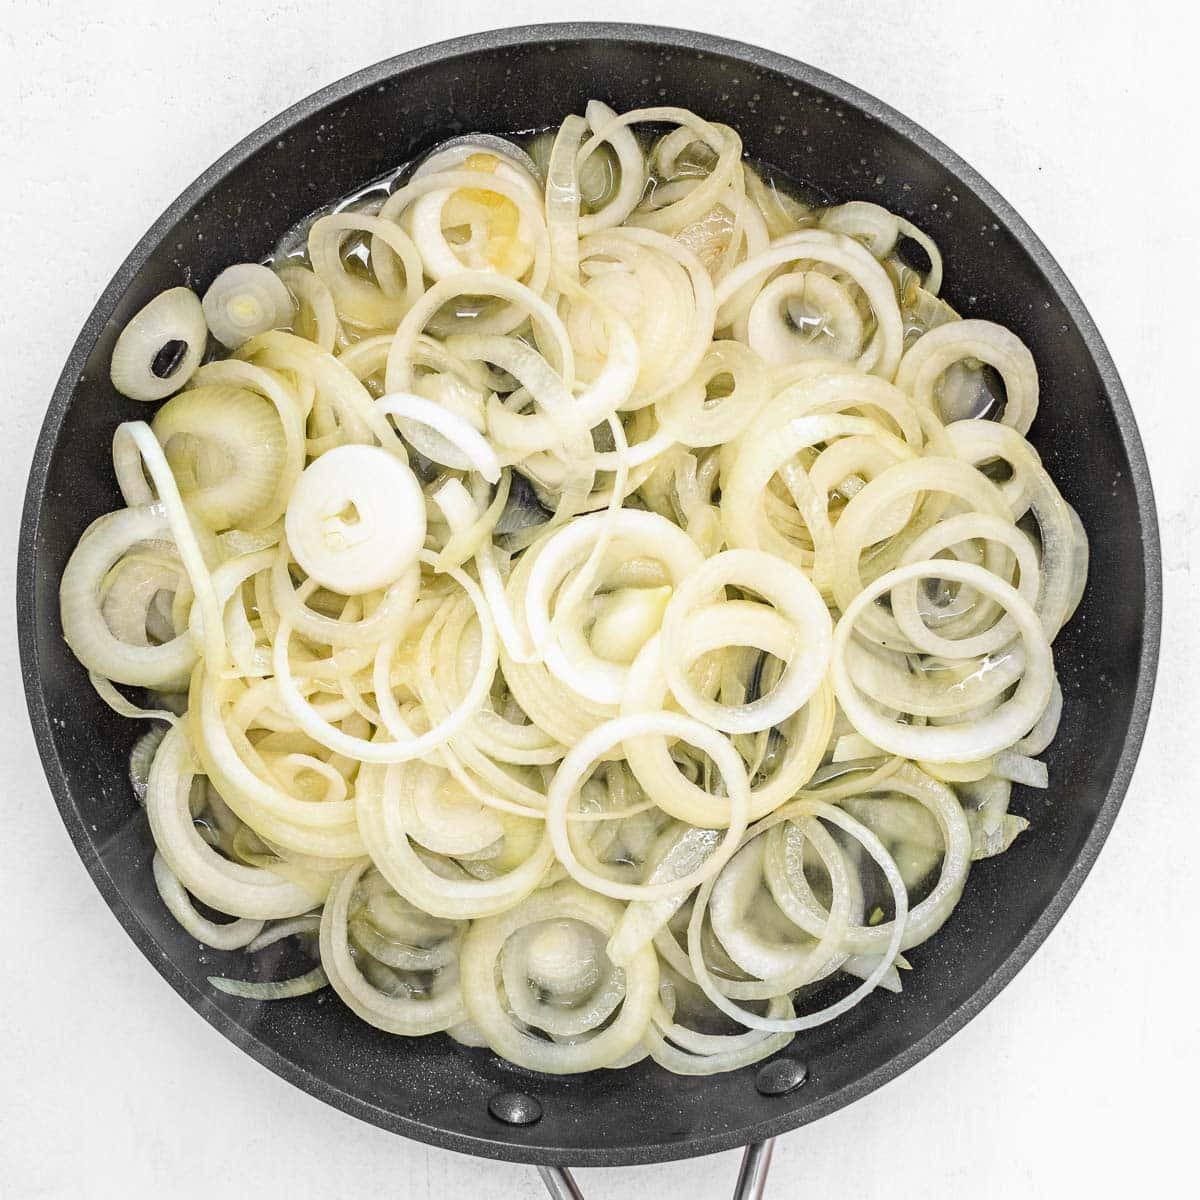 sauté onion on a pan